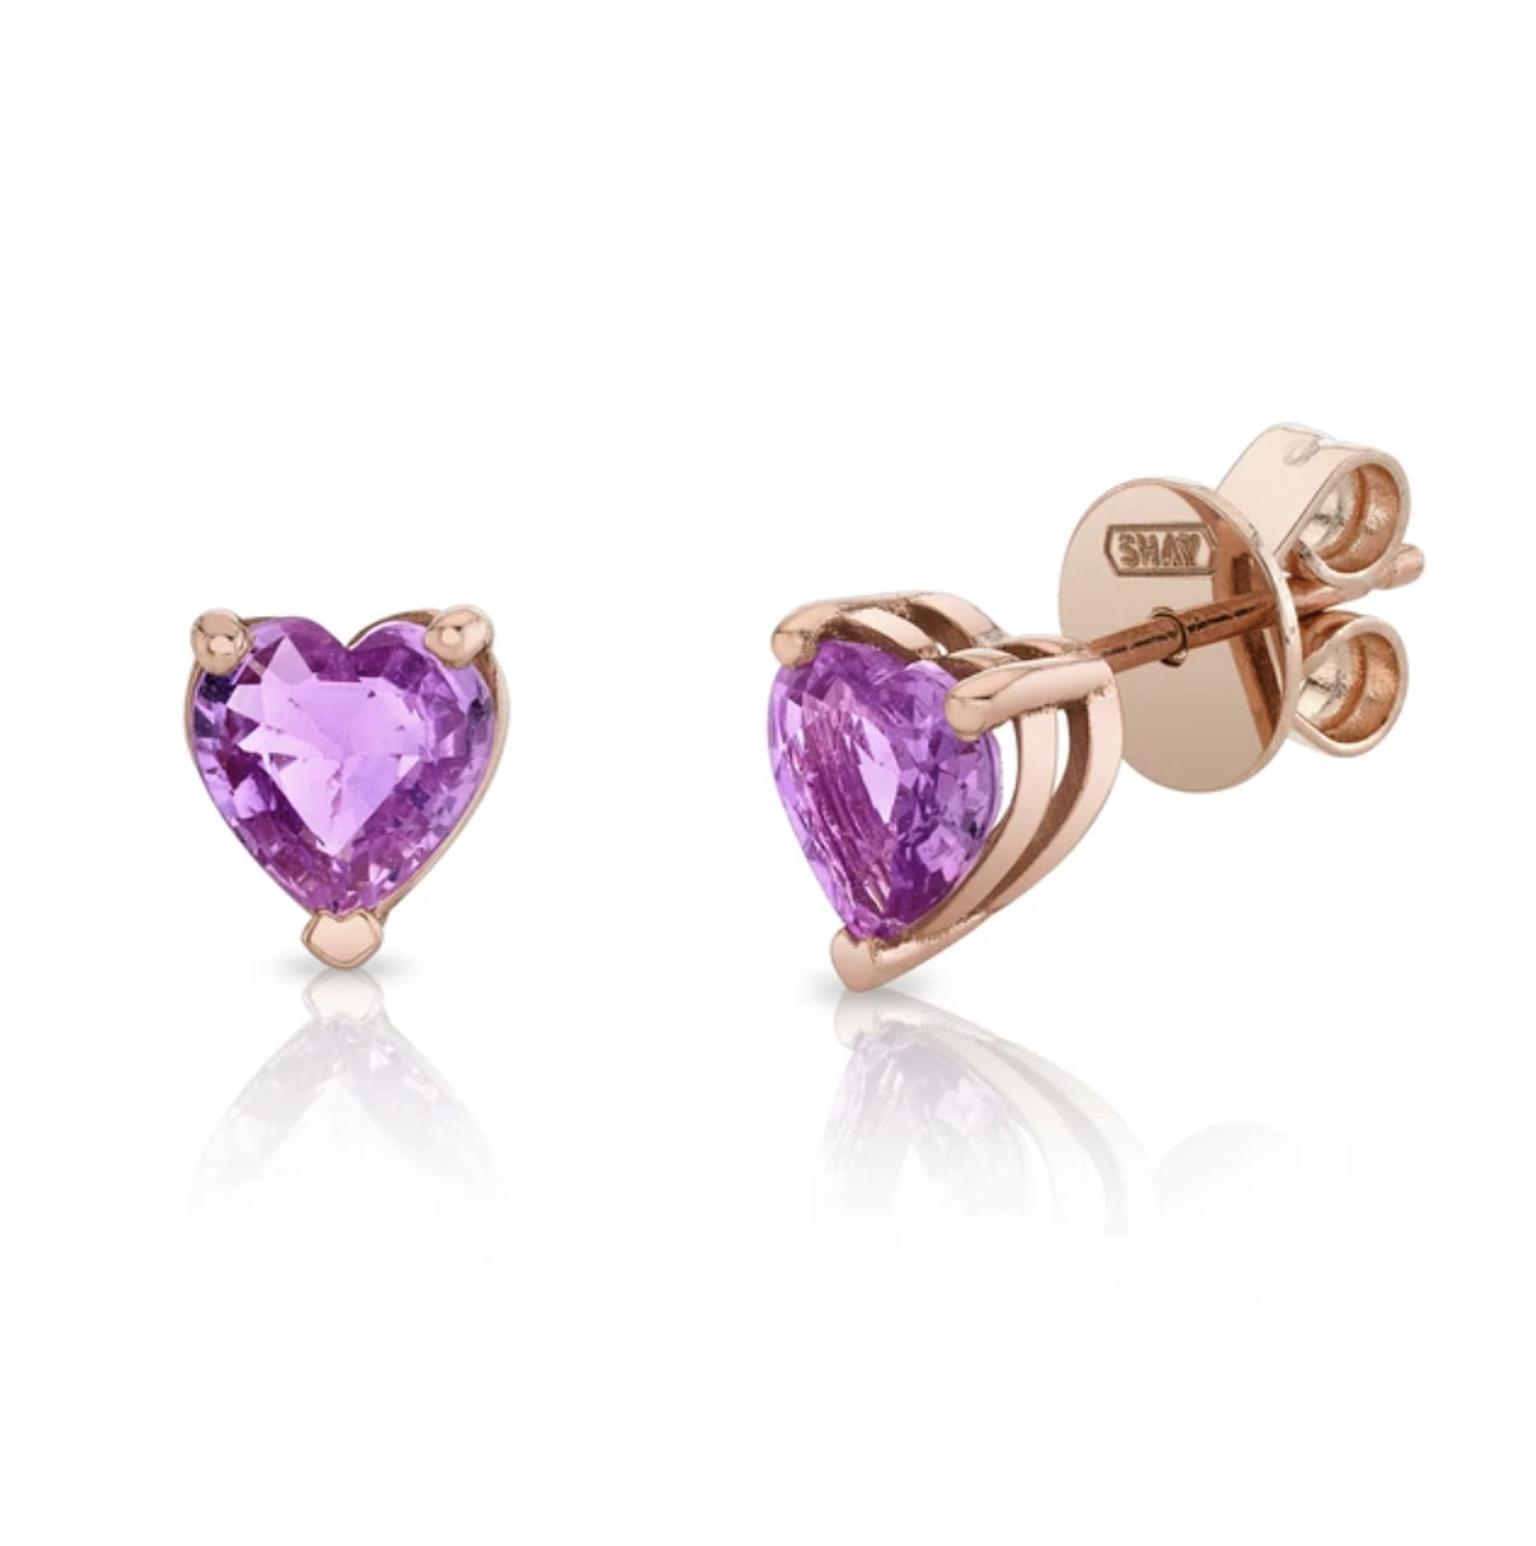 Valentine jewellery inspiration below £1,500